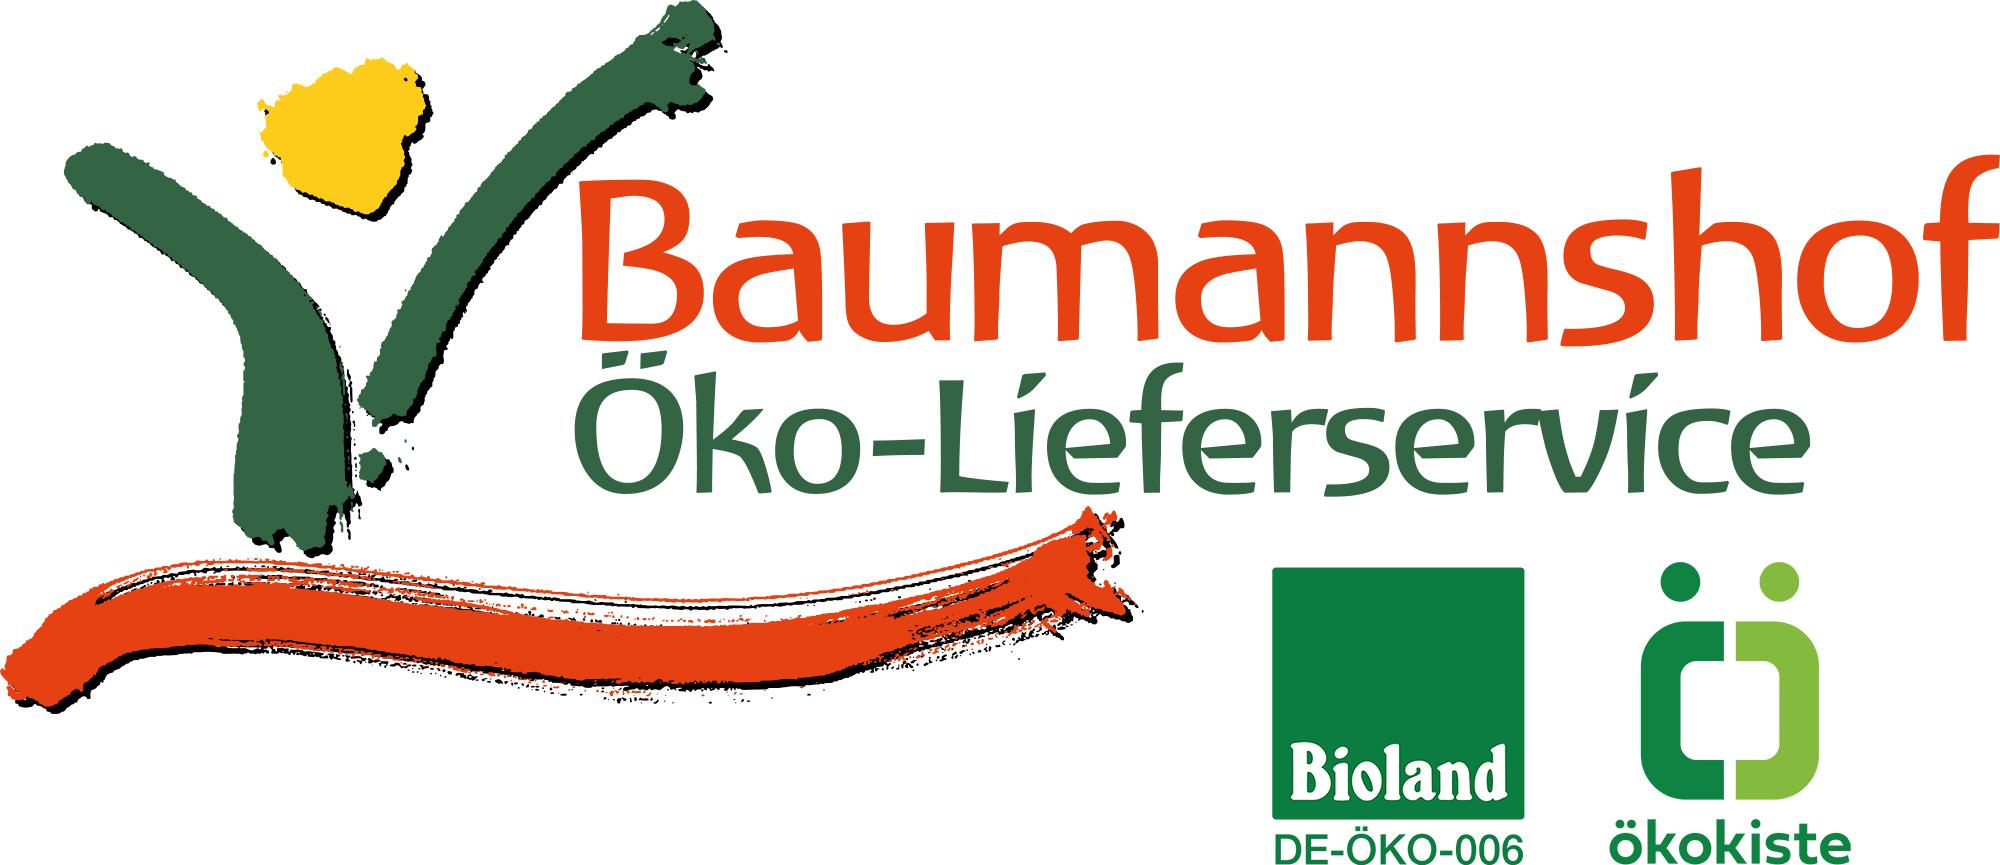 Baumannshof Öko-Lieferservice